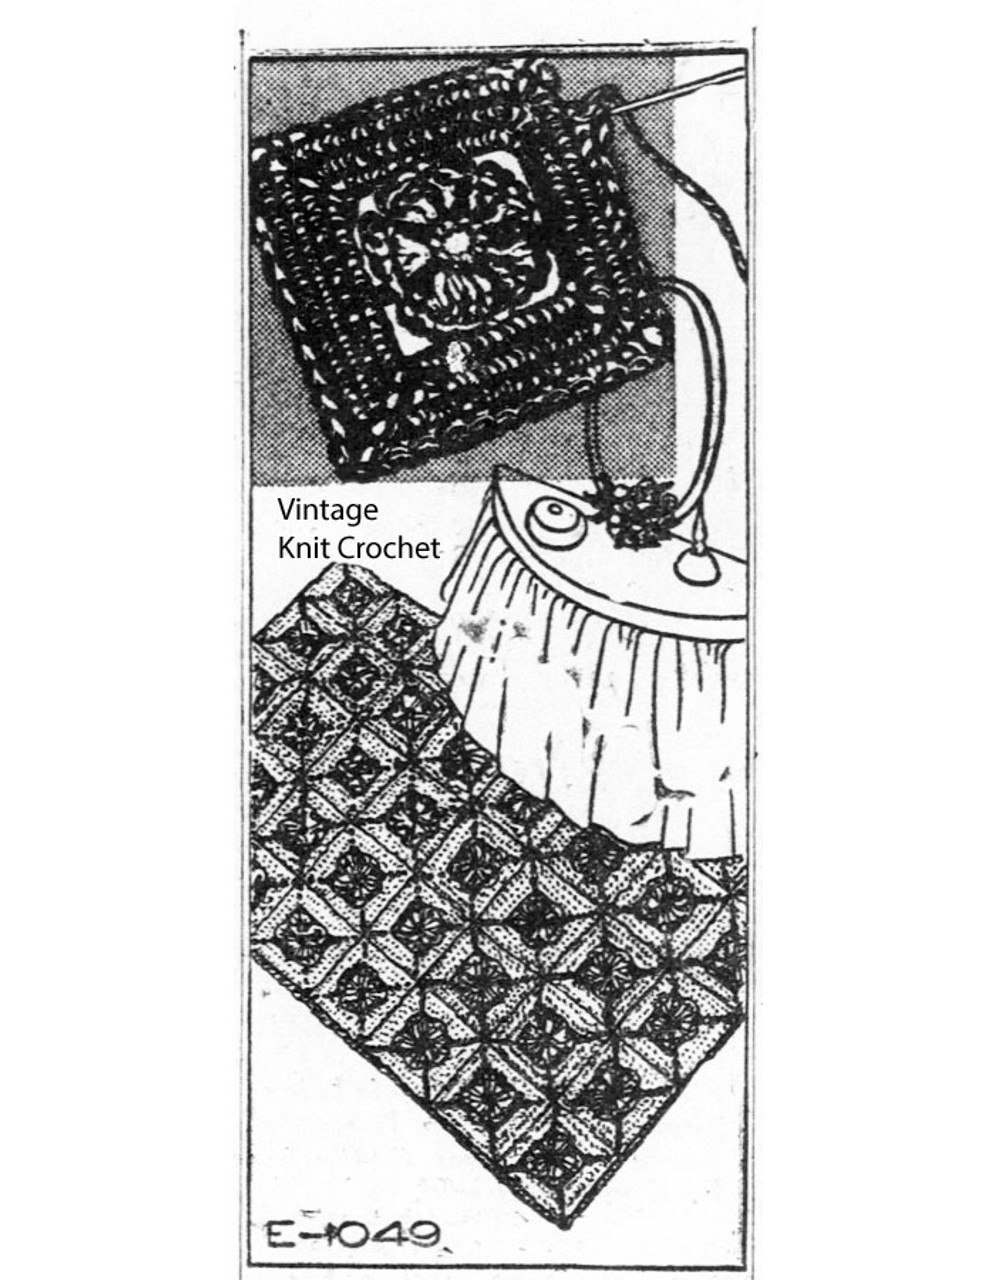 Crochet Rug Pattern, Colorful Square Blocks, Mail Order e-1049